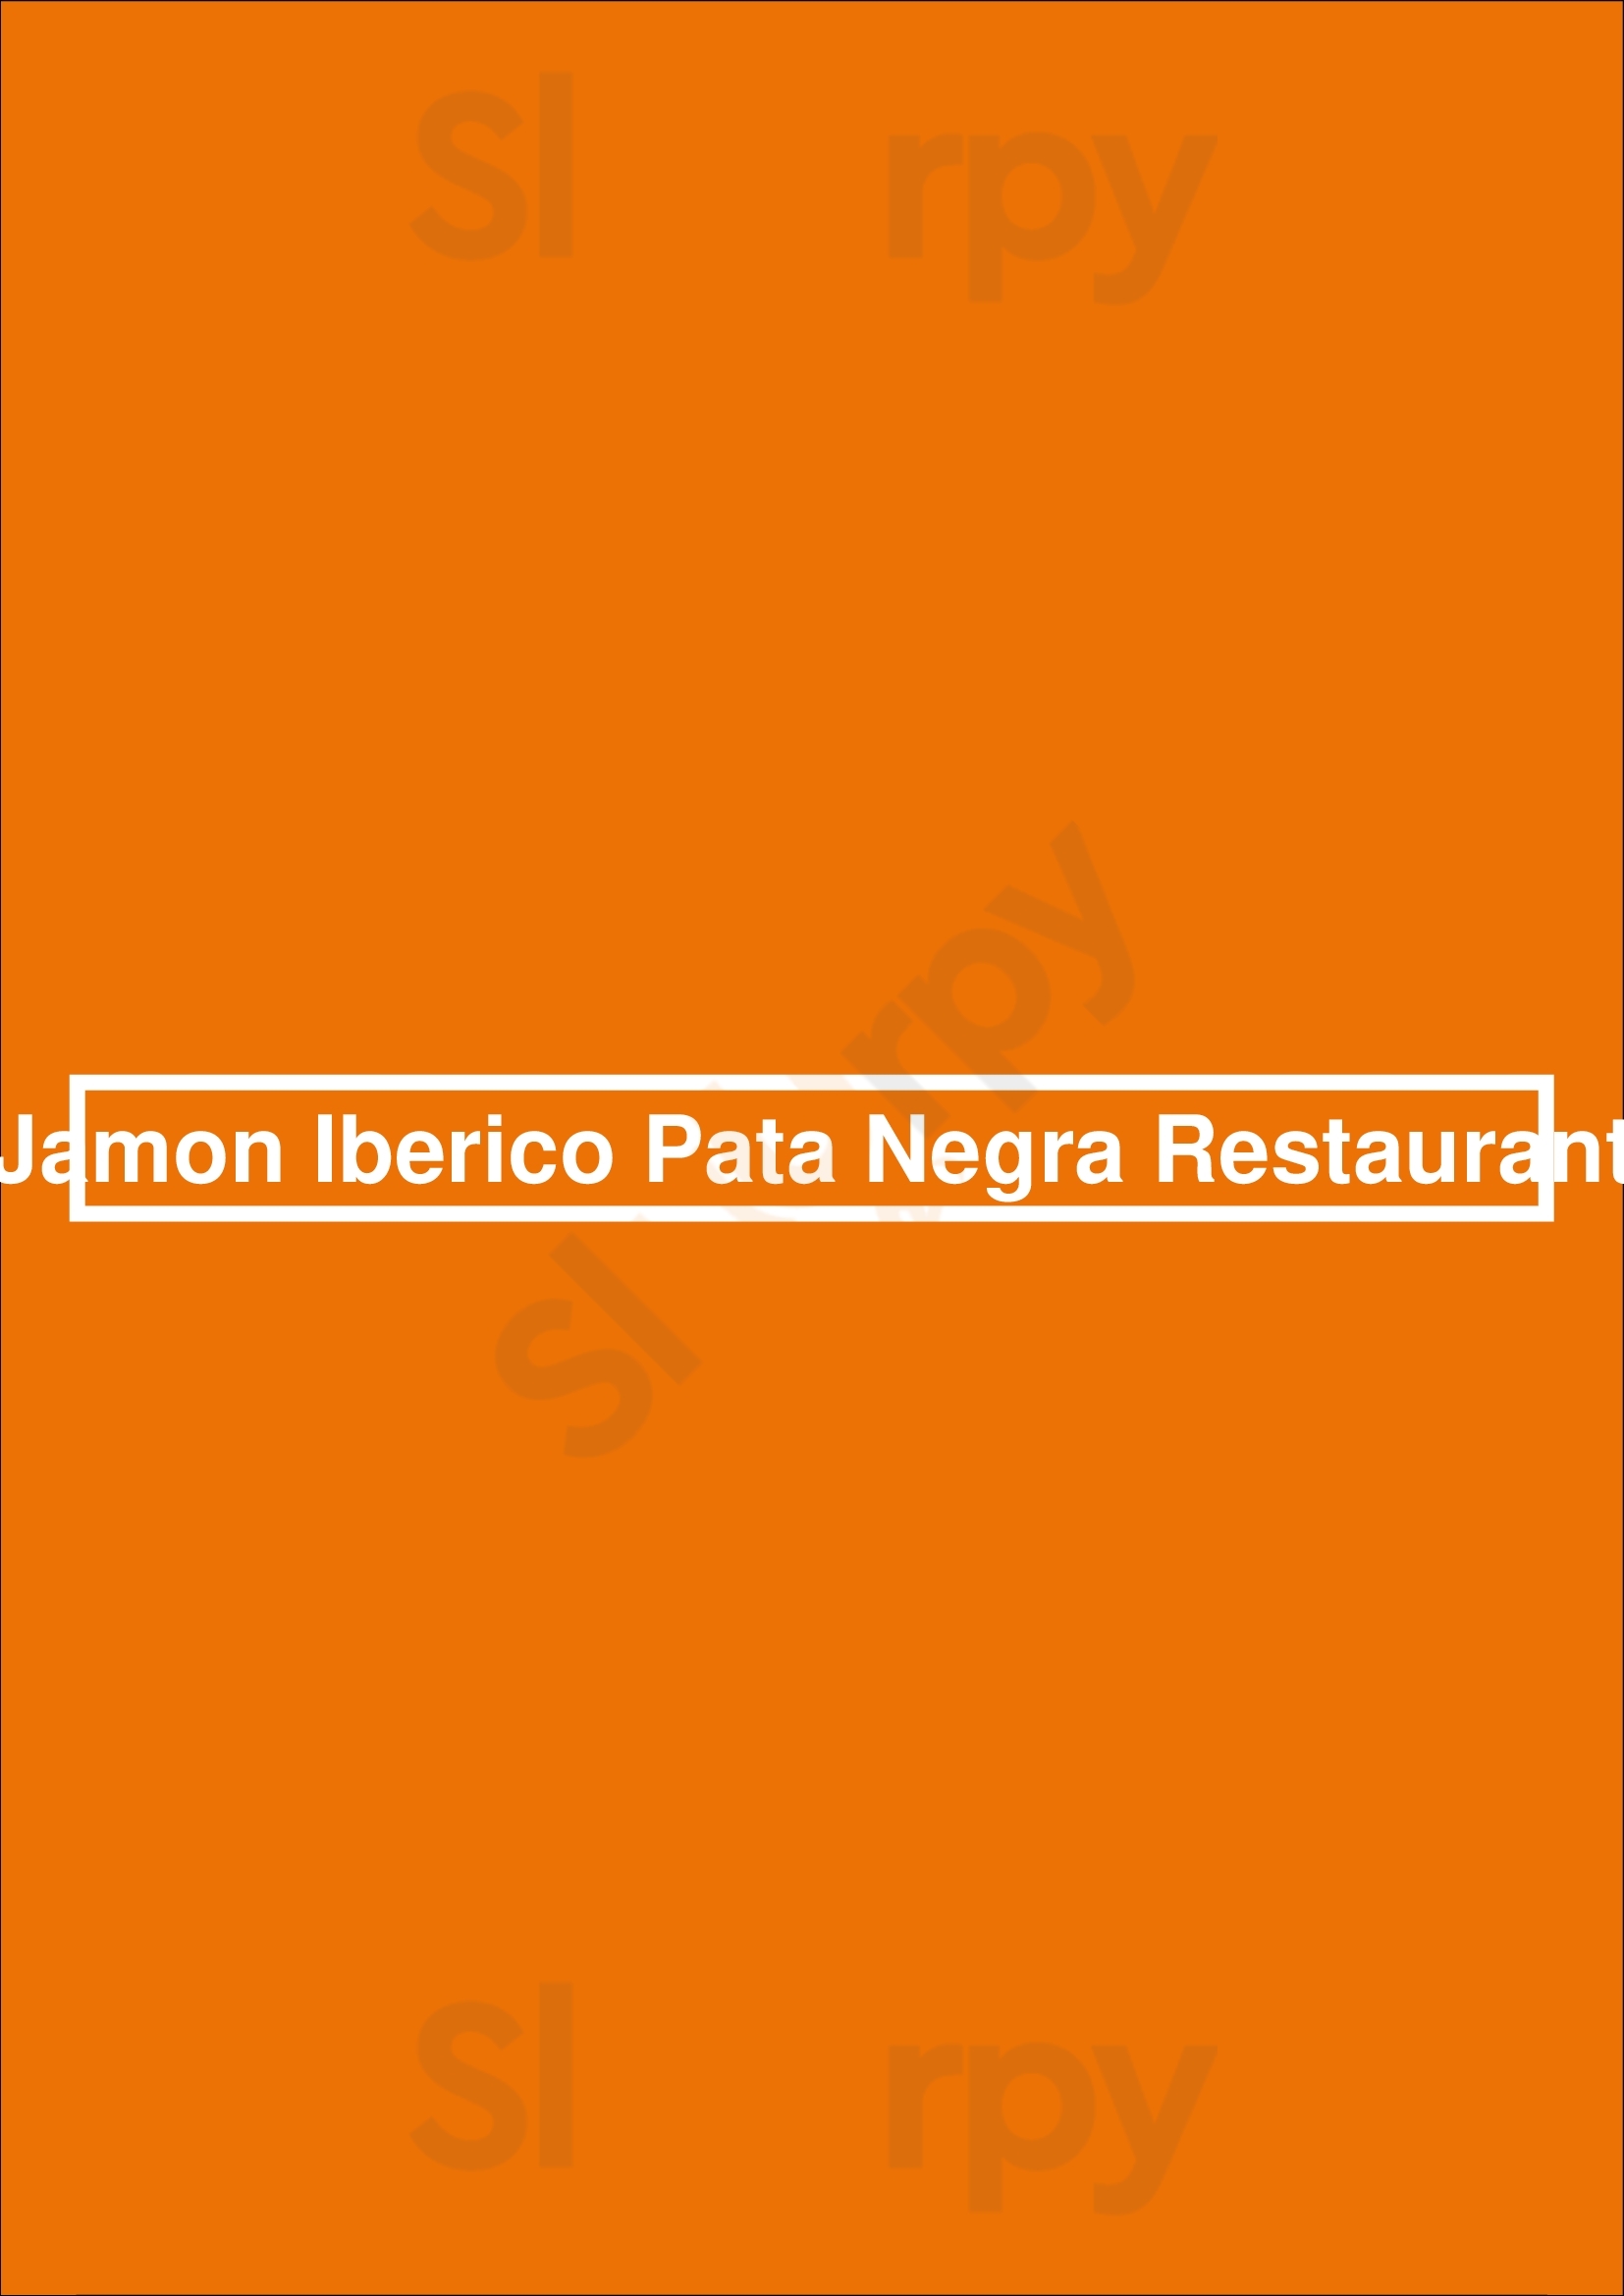 Jamon Iberico Pata Negra Restaurant Miami Menu - 1